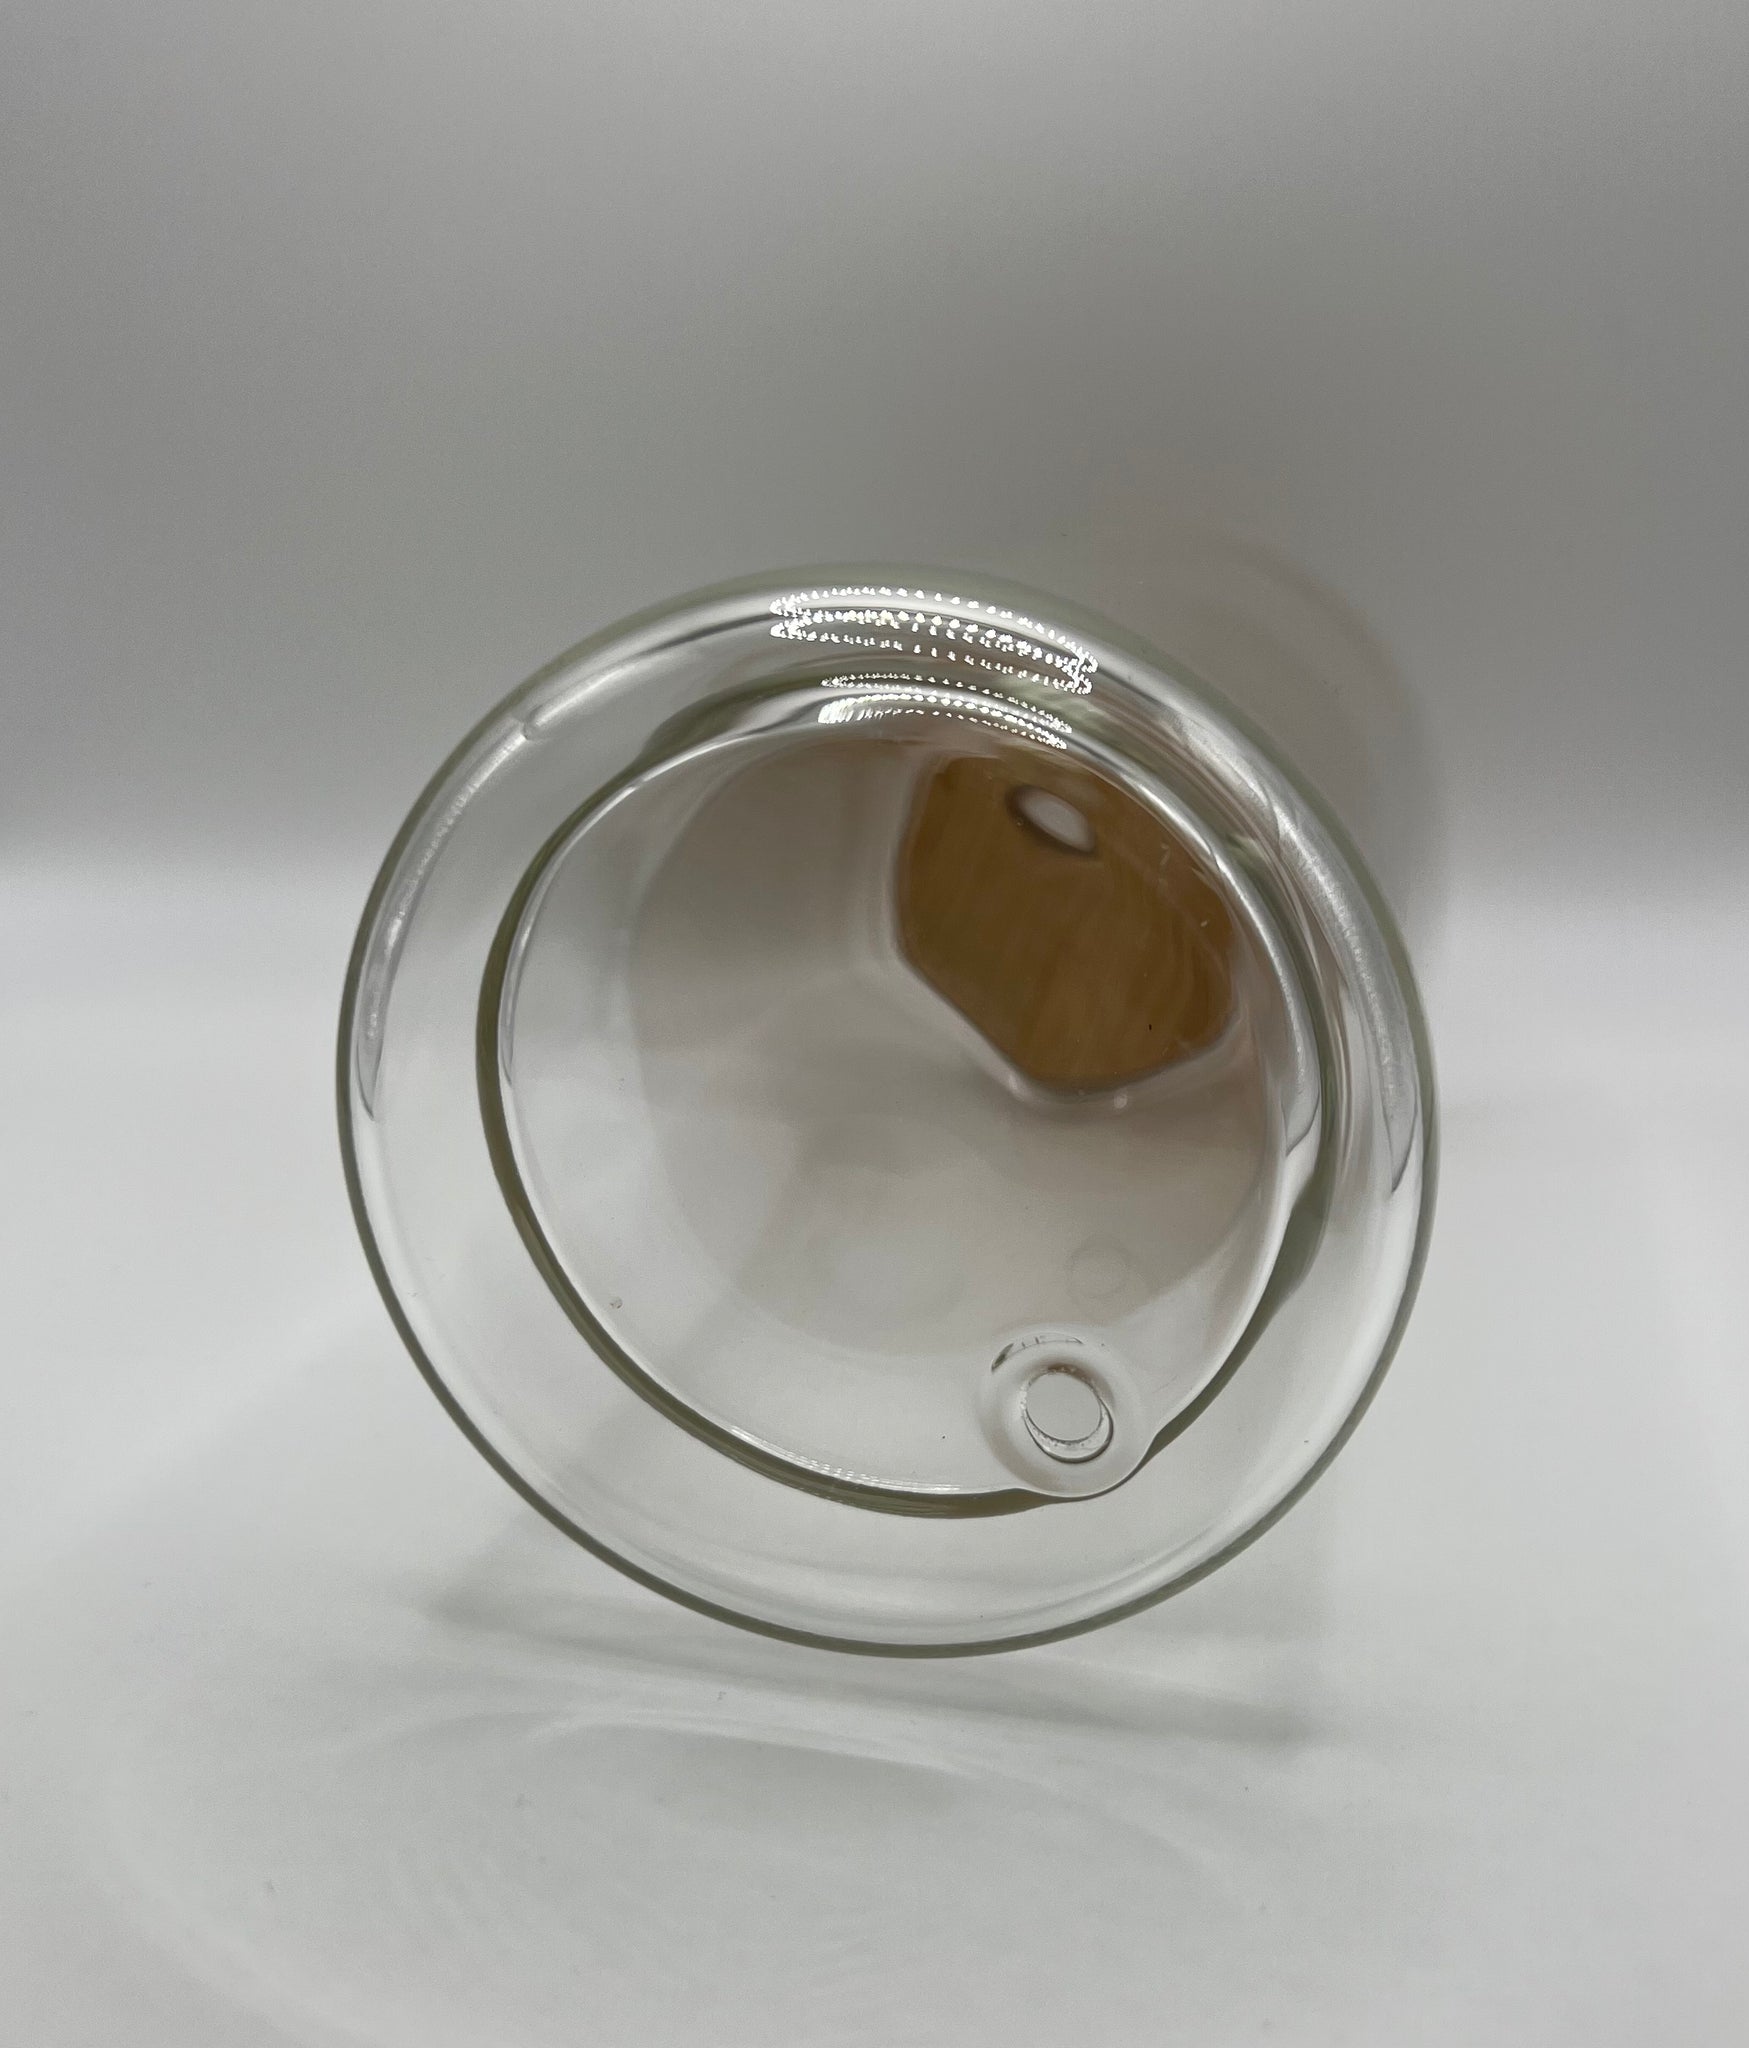 12oz Glass Snow Globe Sublimation cups